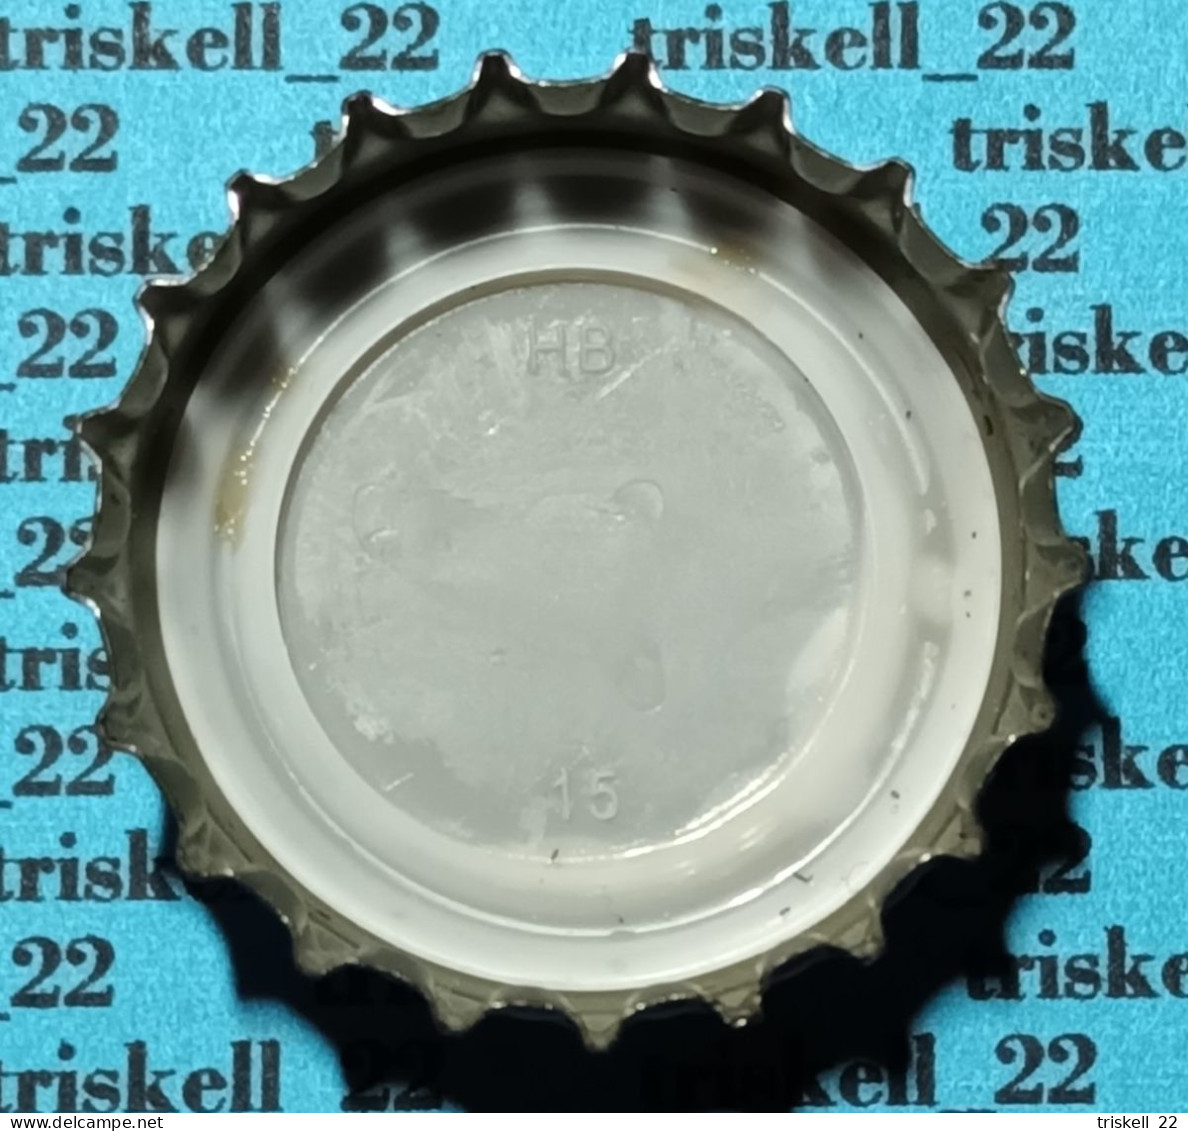 Gulden Draak Classic    Lot N° 39 - Cerveza